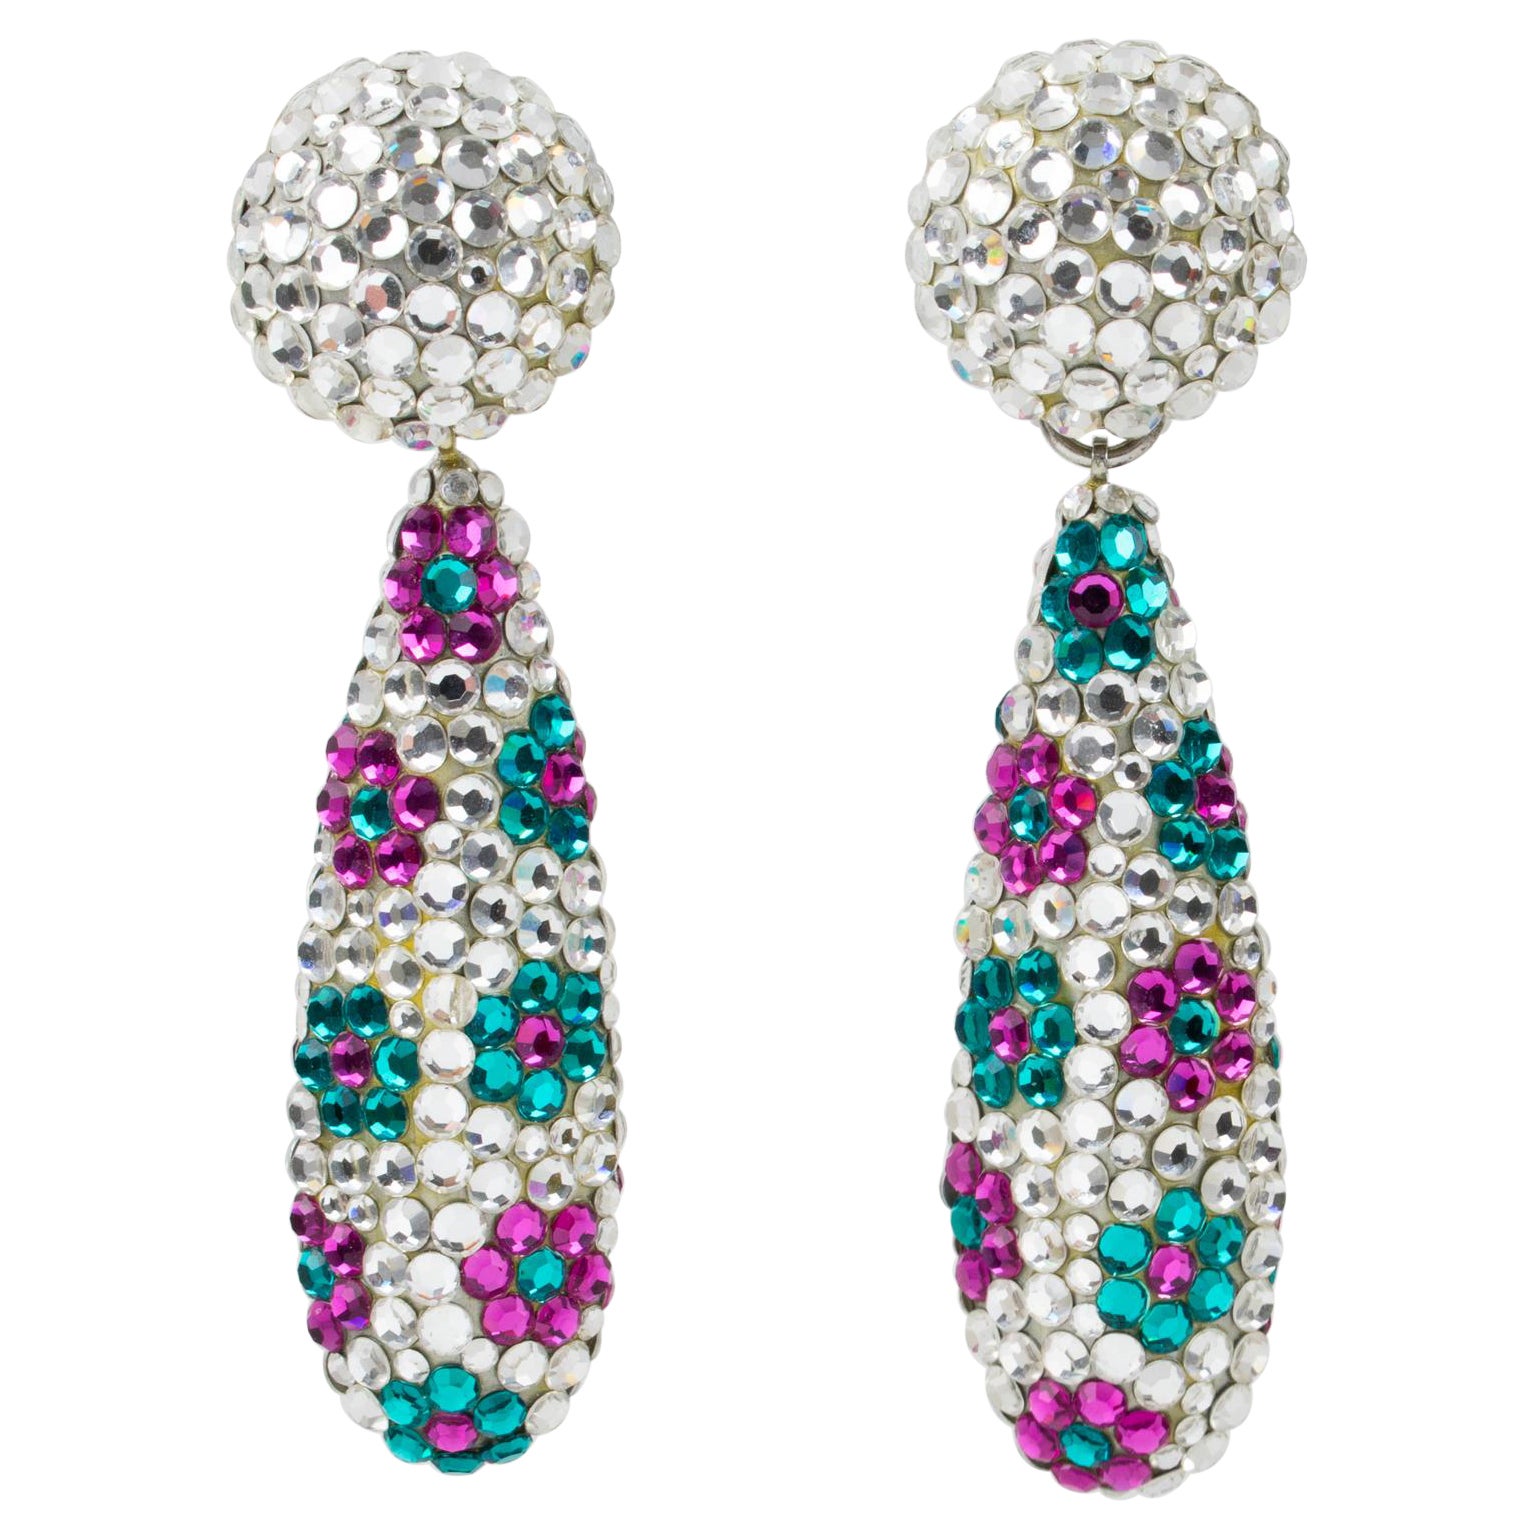 Richard Kerr Dangle Clip Earrings Turquoise and Fuchsia Crystal Flowers